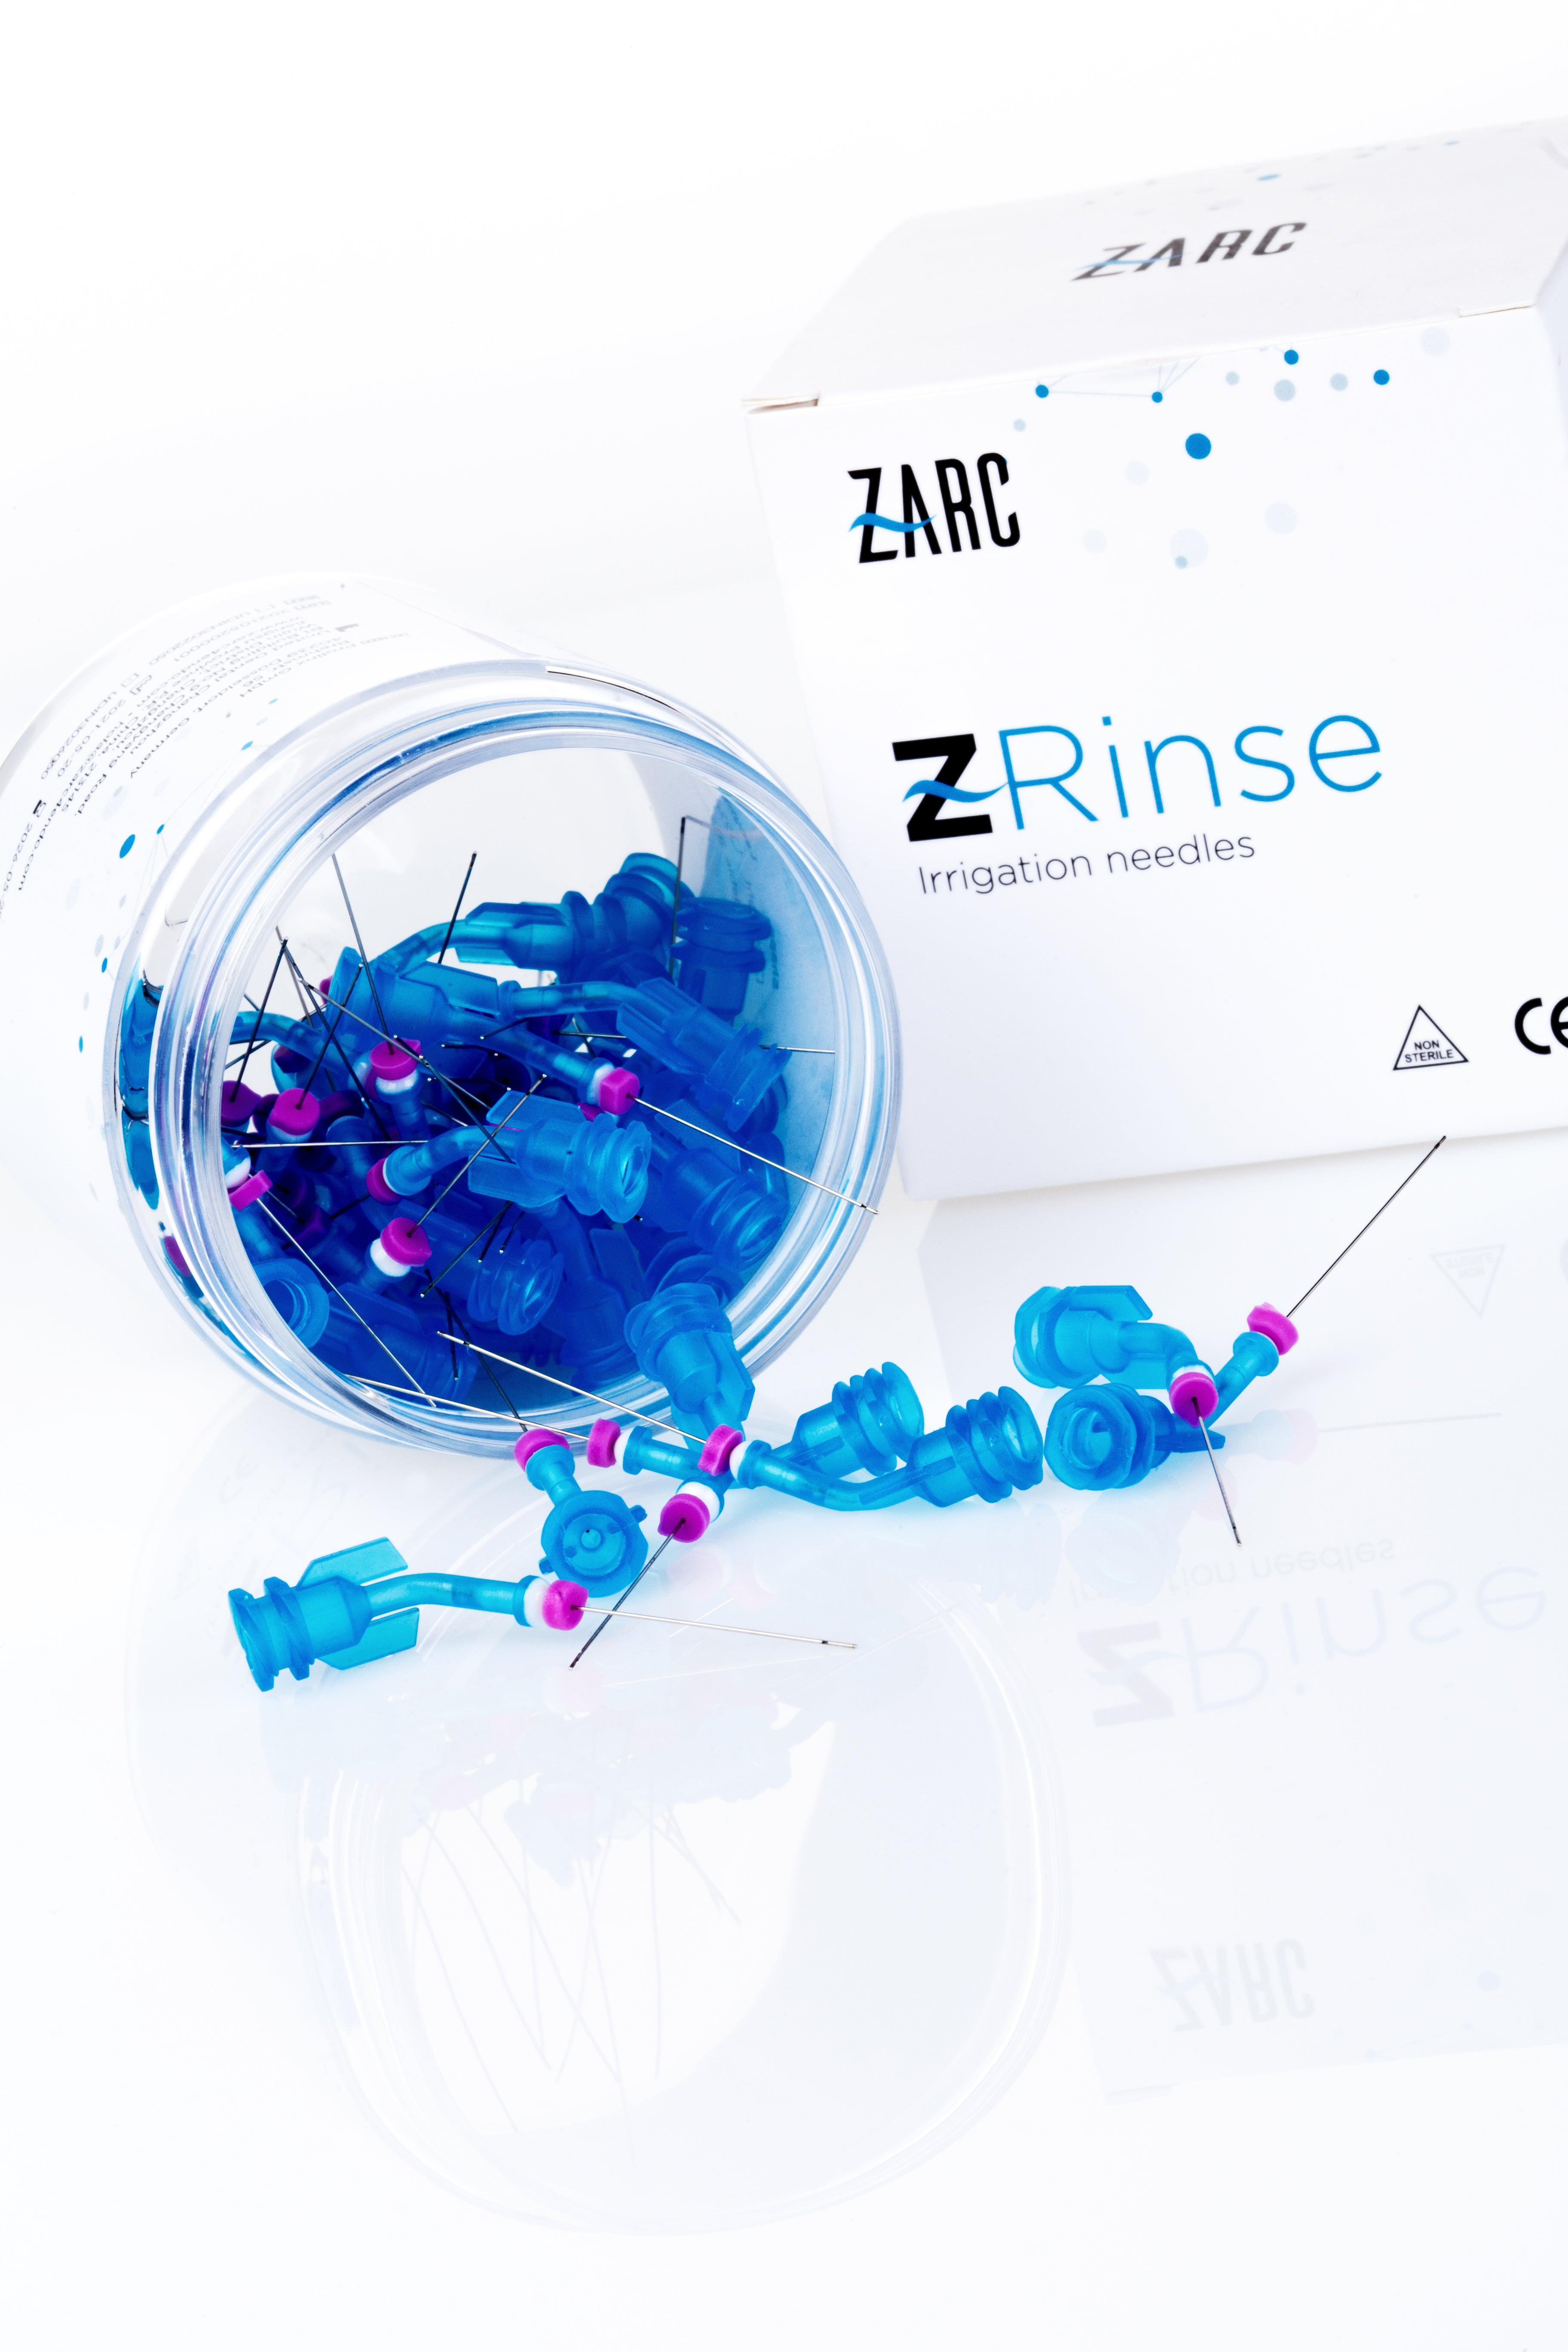 Z-Rinse Irrigation needles